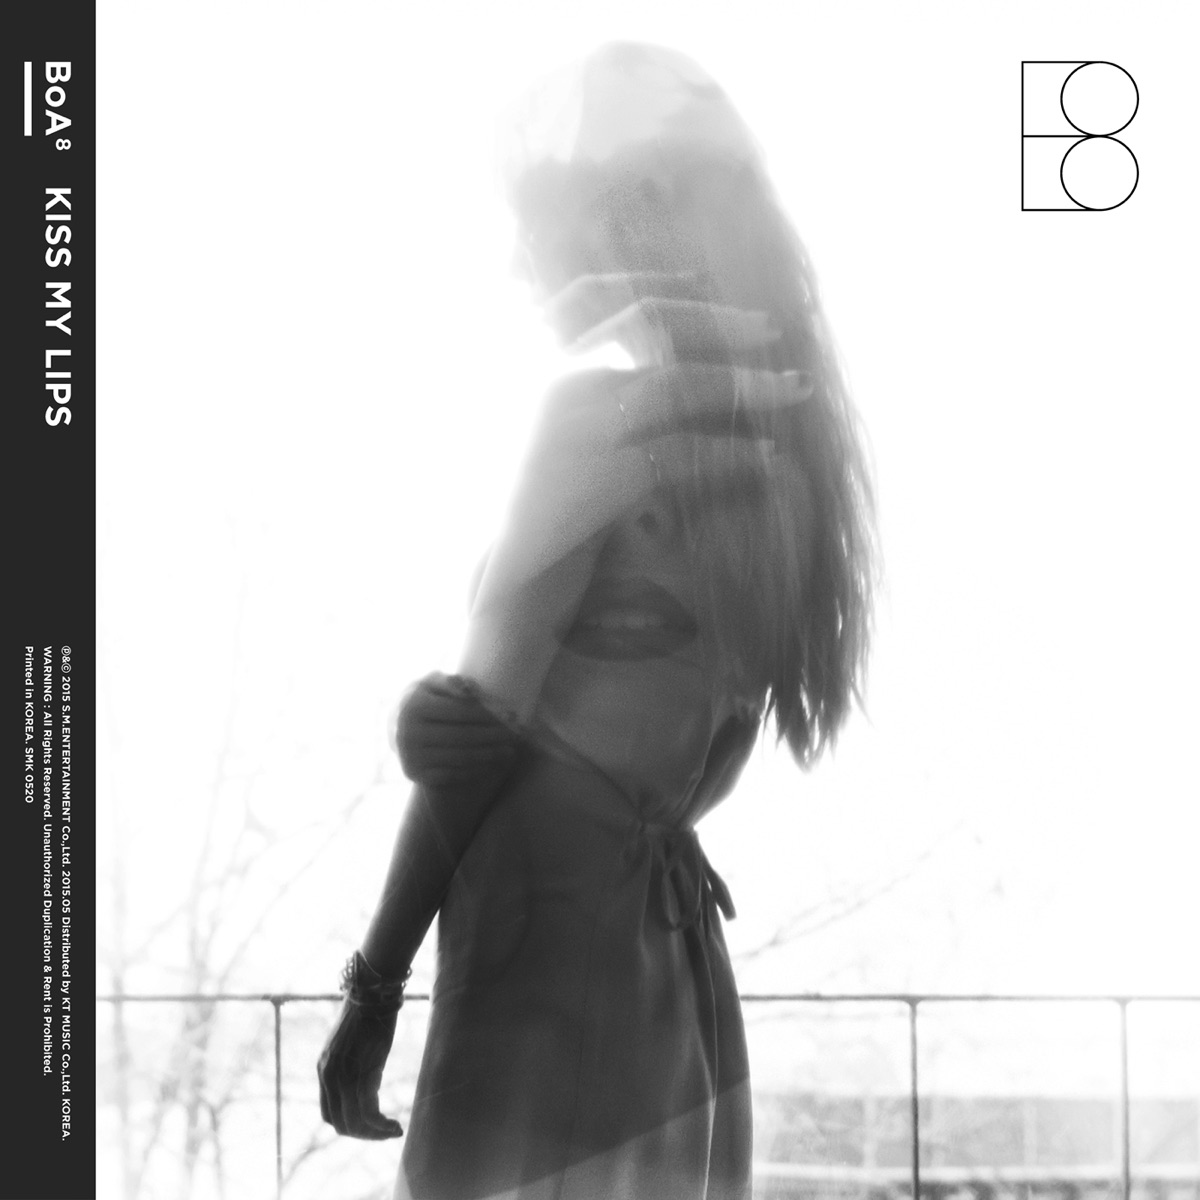 Hurricane Venus by BoA on Apple Music